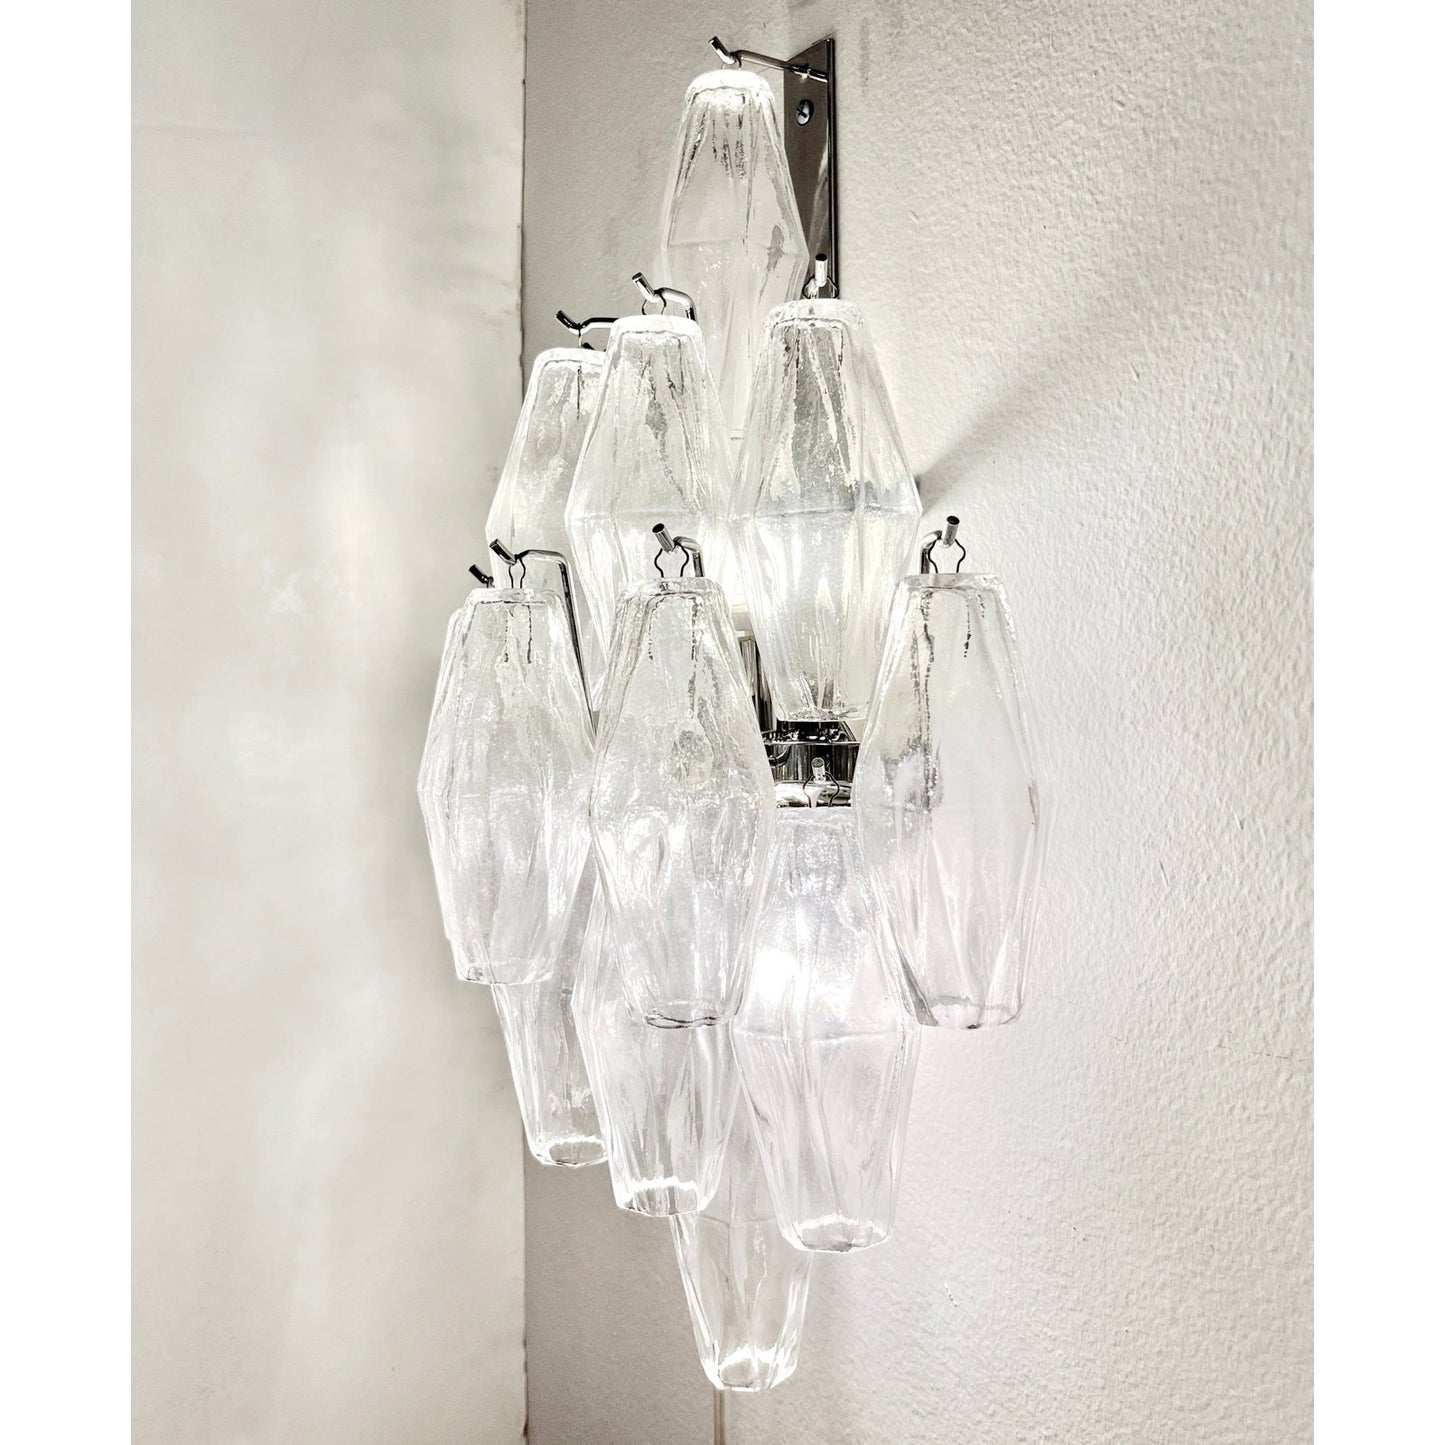 Contemporary Italian Poliedri Crystal Clear Murano Glass Multi-Tier Wall Lights